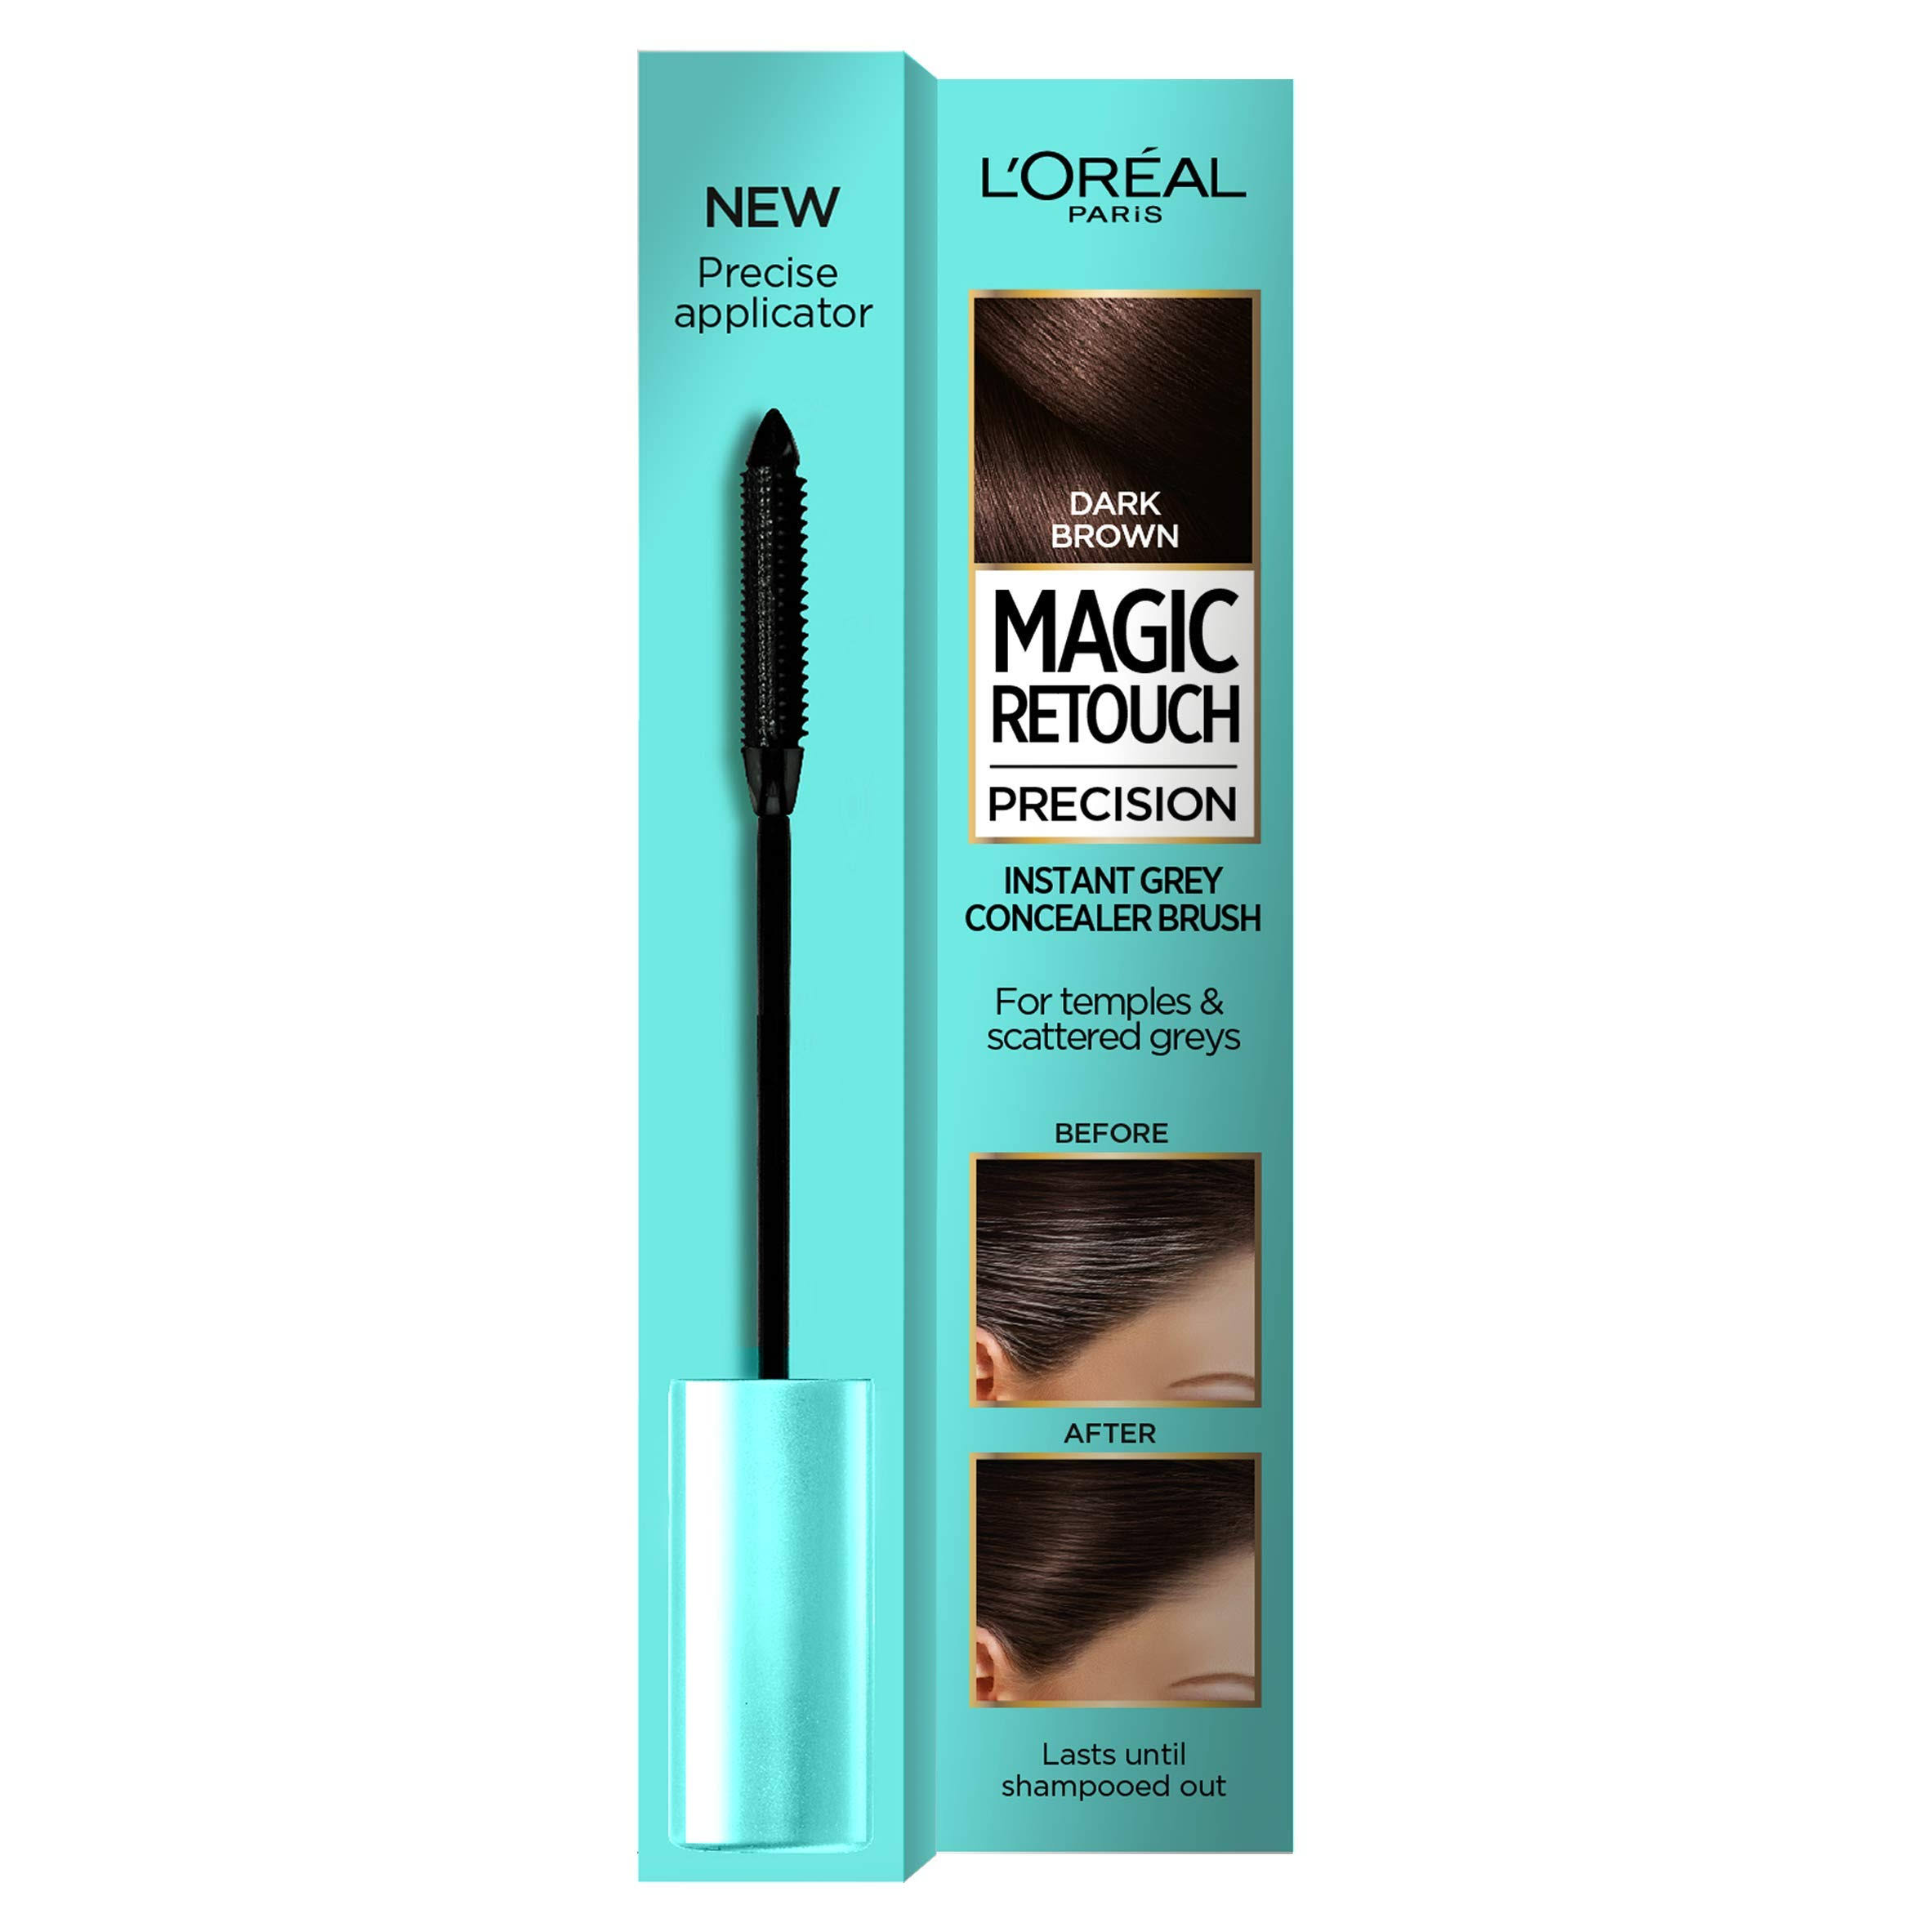 L'Oreal Magic Retouch Precision Instant Grey Concealer Brush - Dark Brown